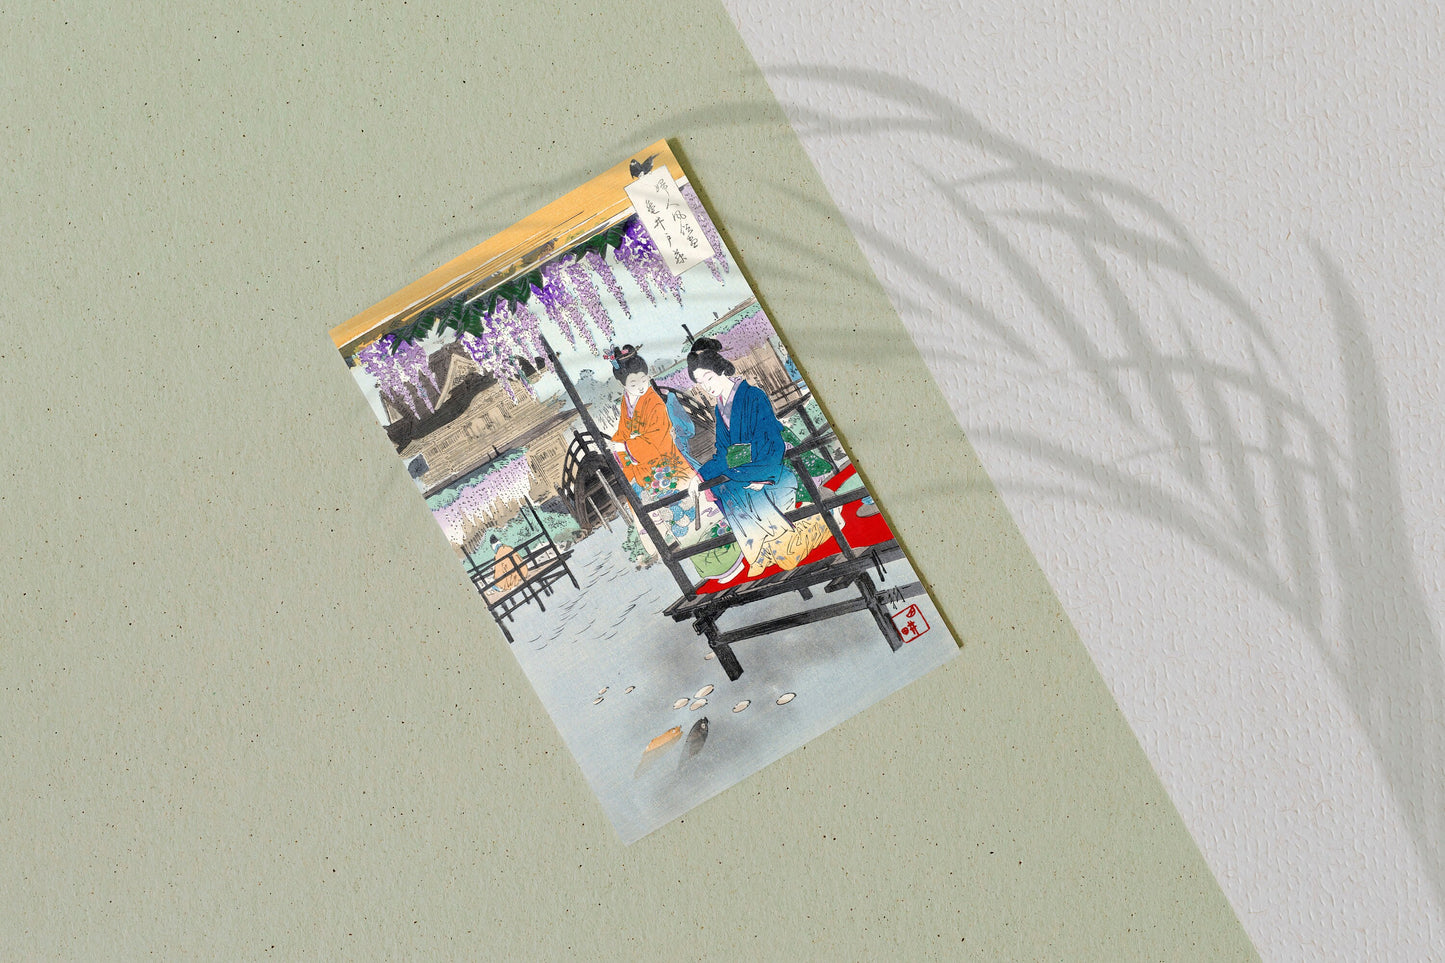 Two Maidens on Veranda Overlooking Fish Pond  Japan Japanese Poster Illustration Print Wall Hanging Decor